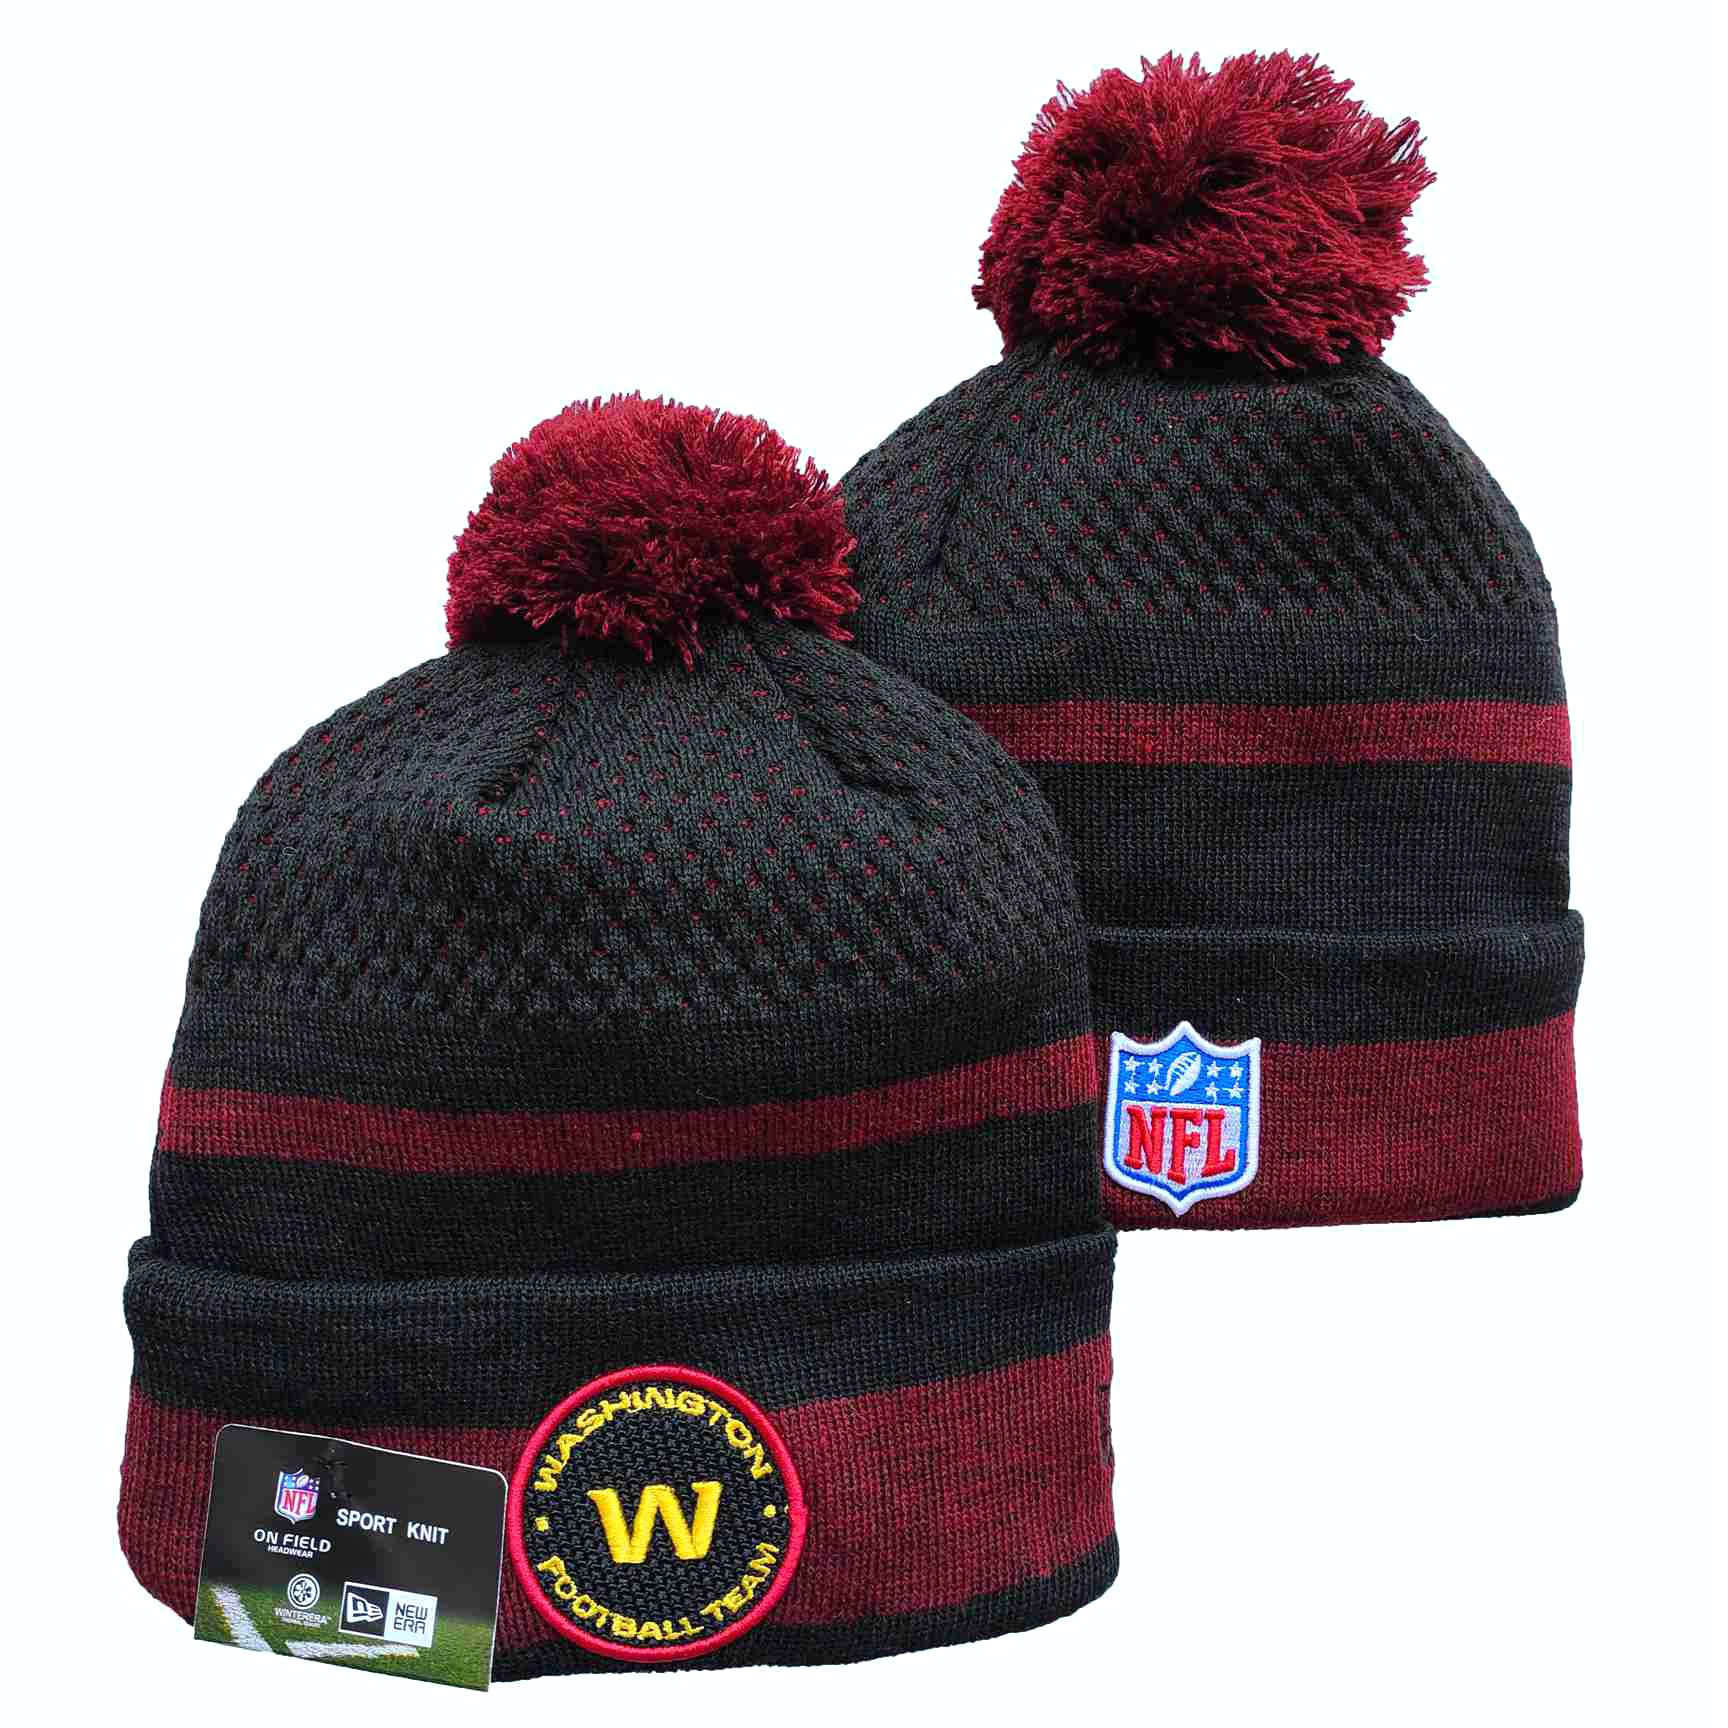 NFL Washington Redskins Beanies Knit Hats-YD1145